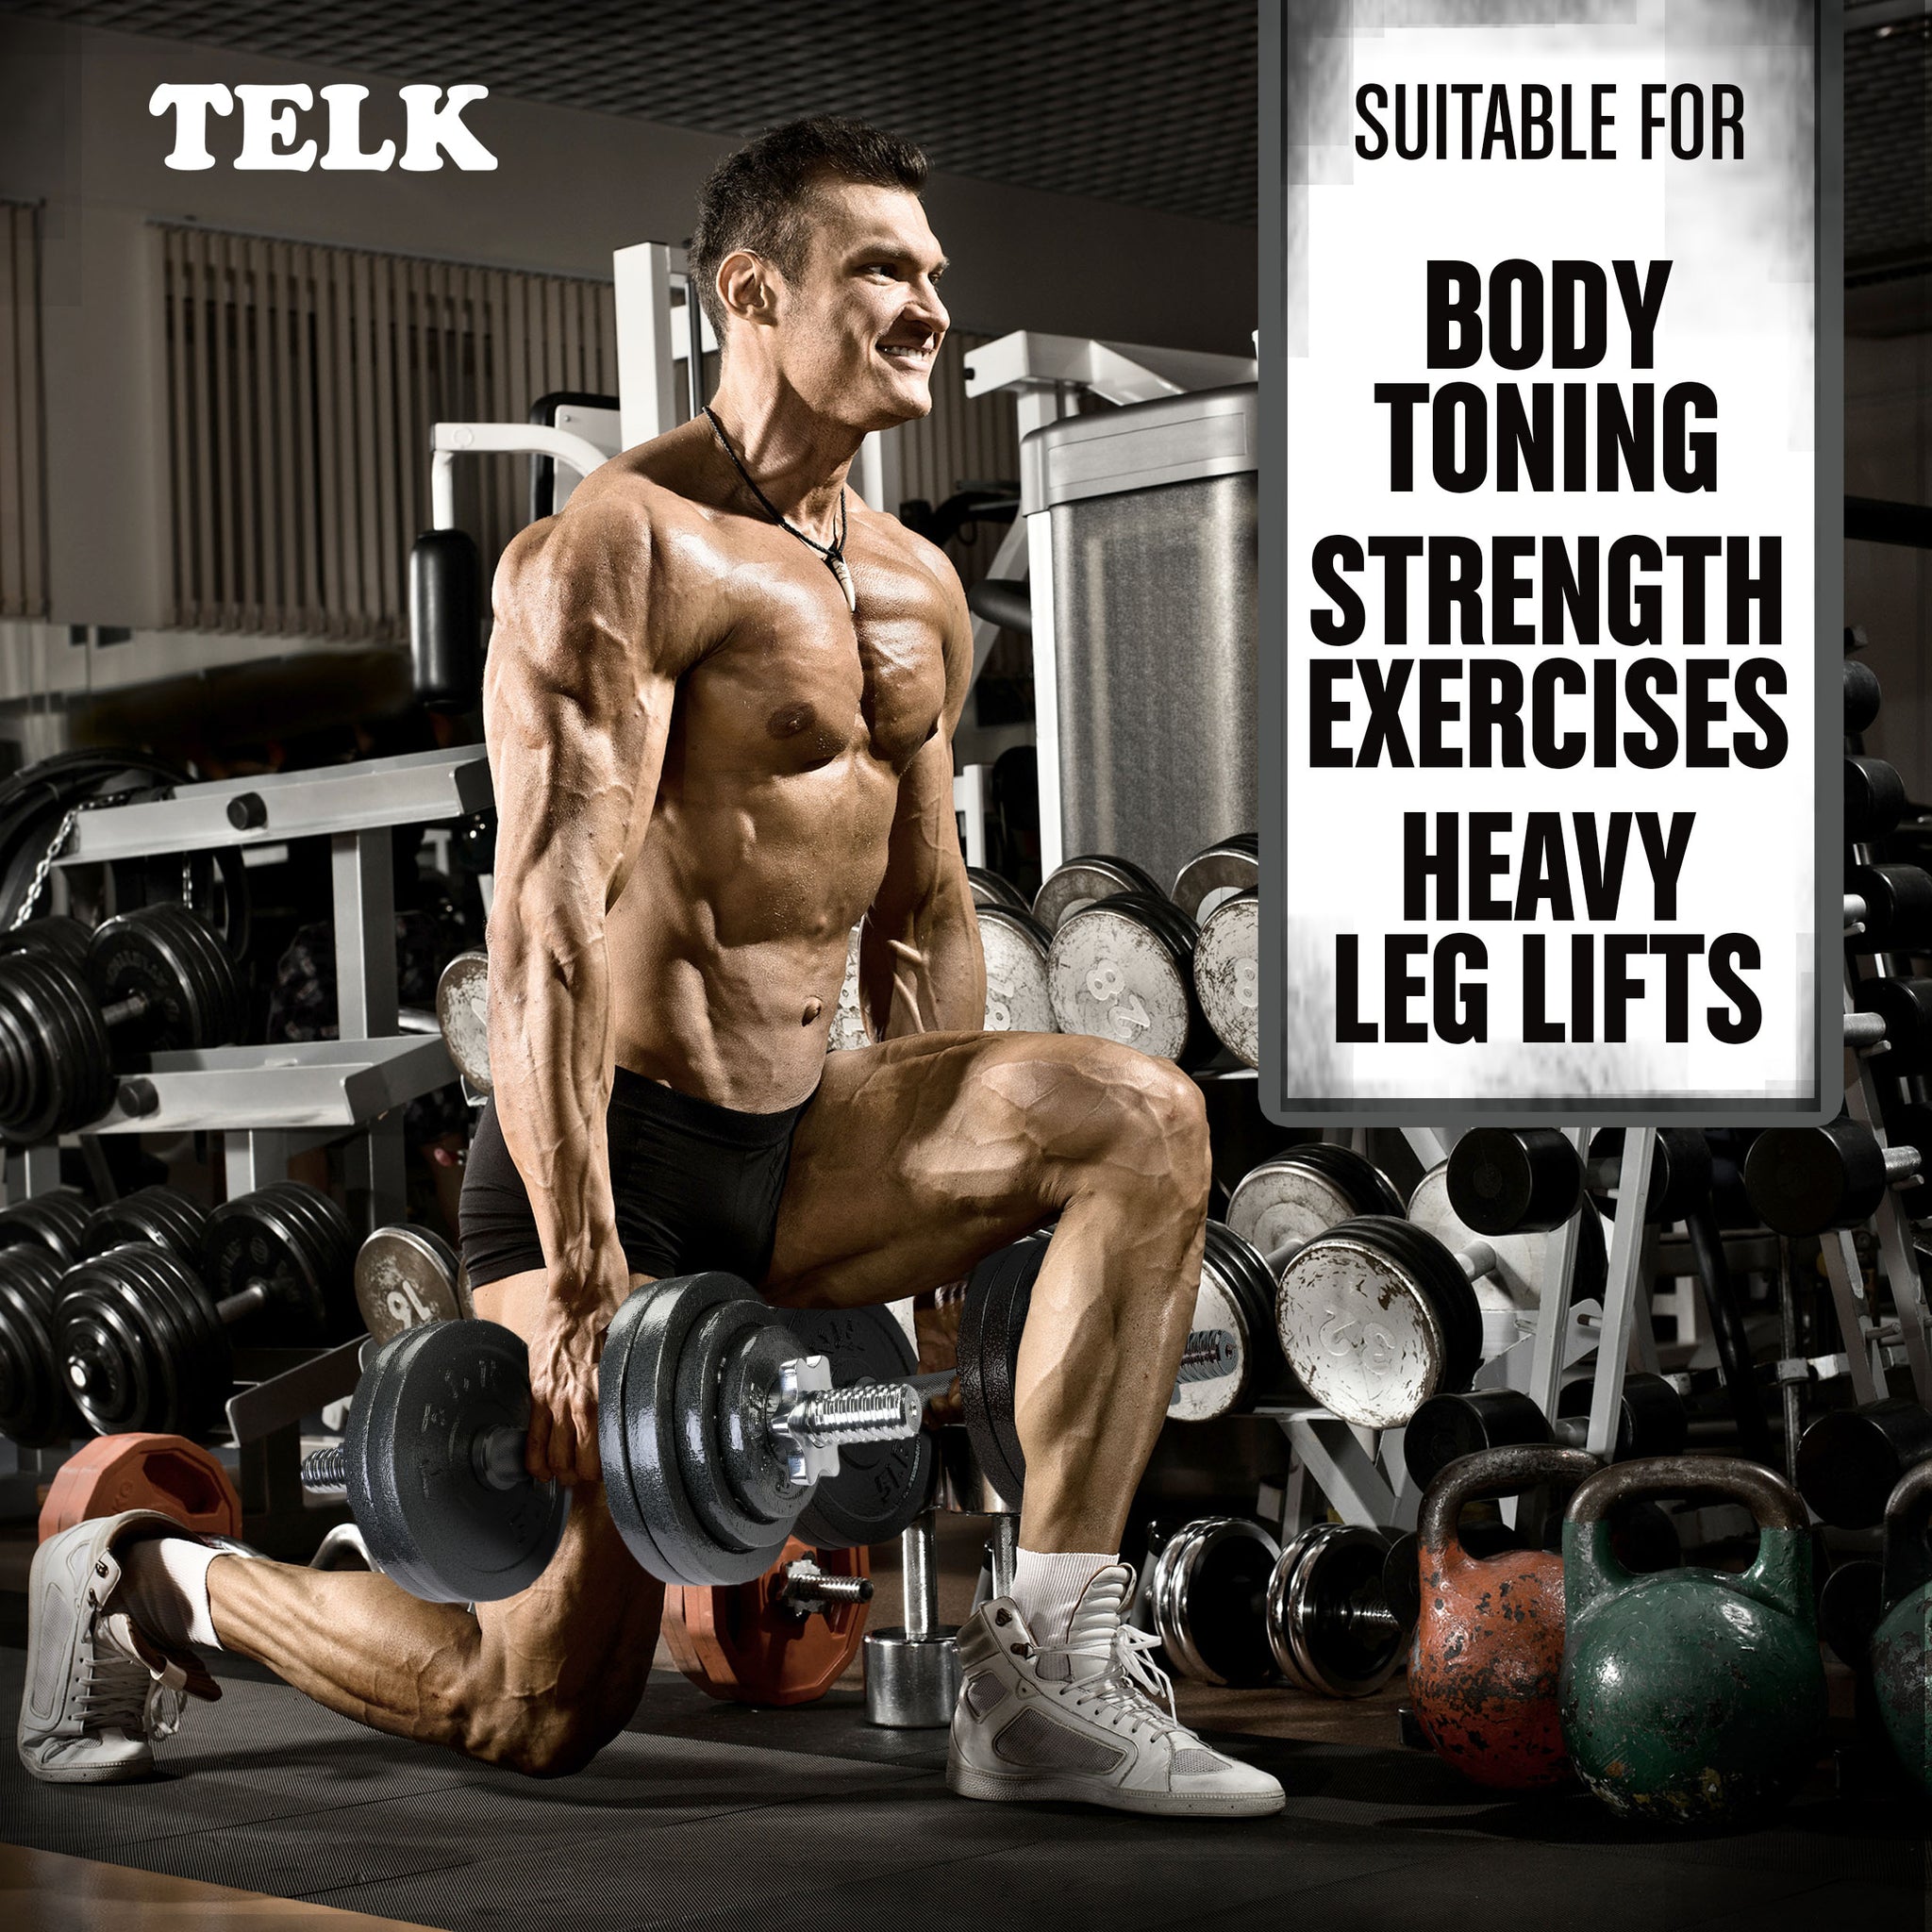 2 ELK Adjustable Dumbbells 200 lbs - Exercise & Workout Equipment good